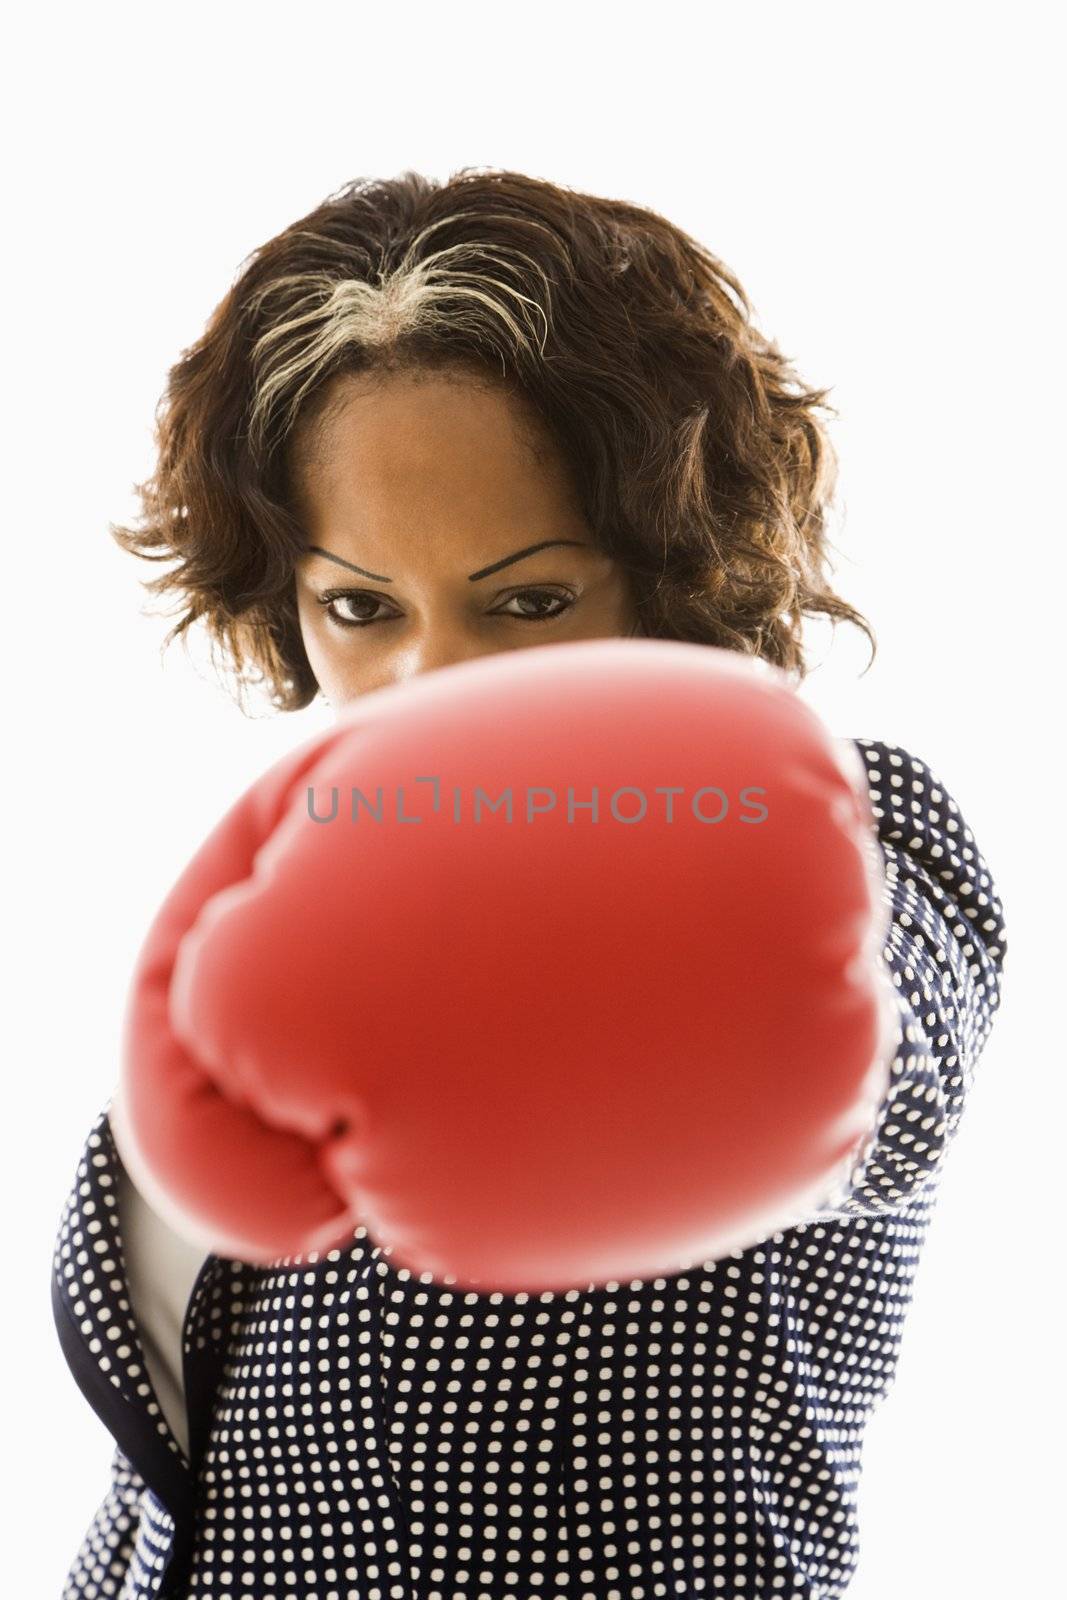 Punching businesswoman. by iofoto